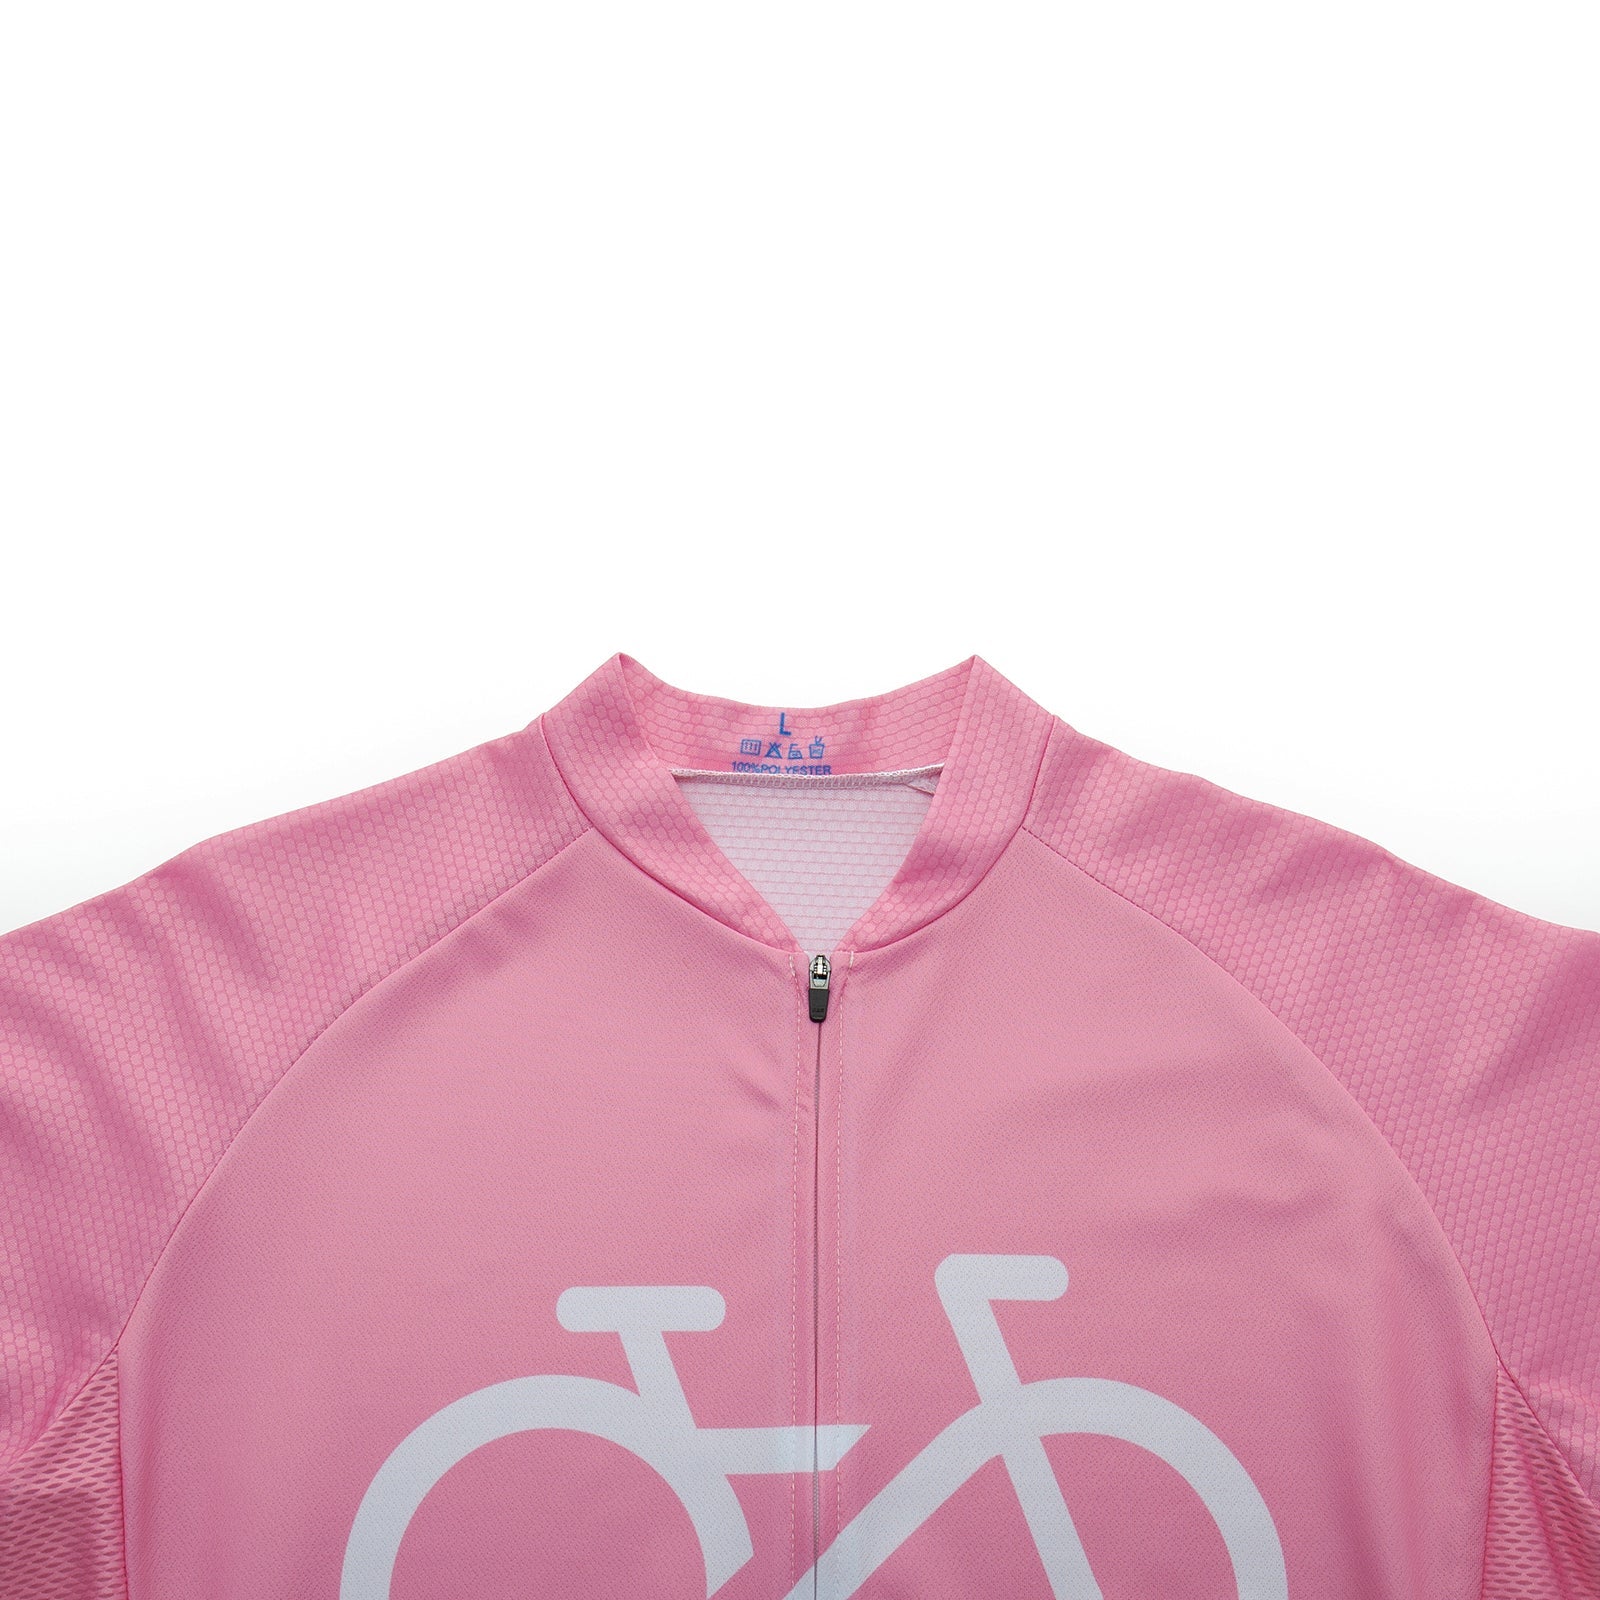 Bike Logo Pink Cycling Jersey Set